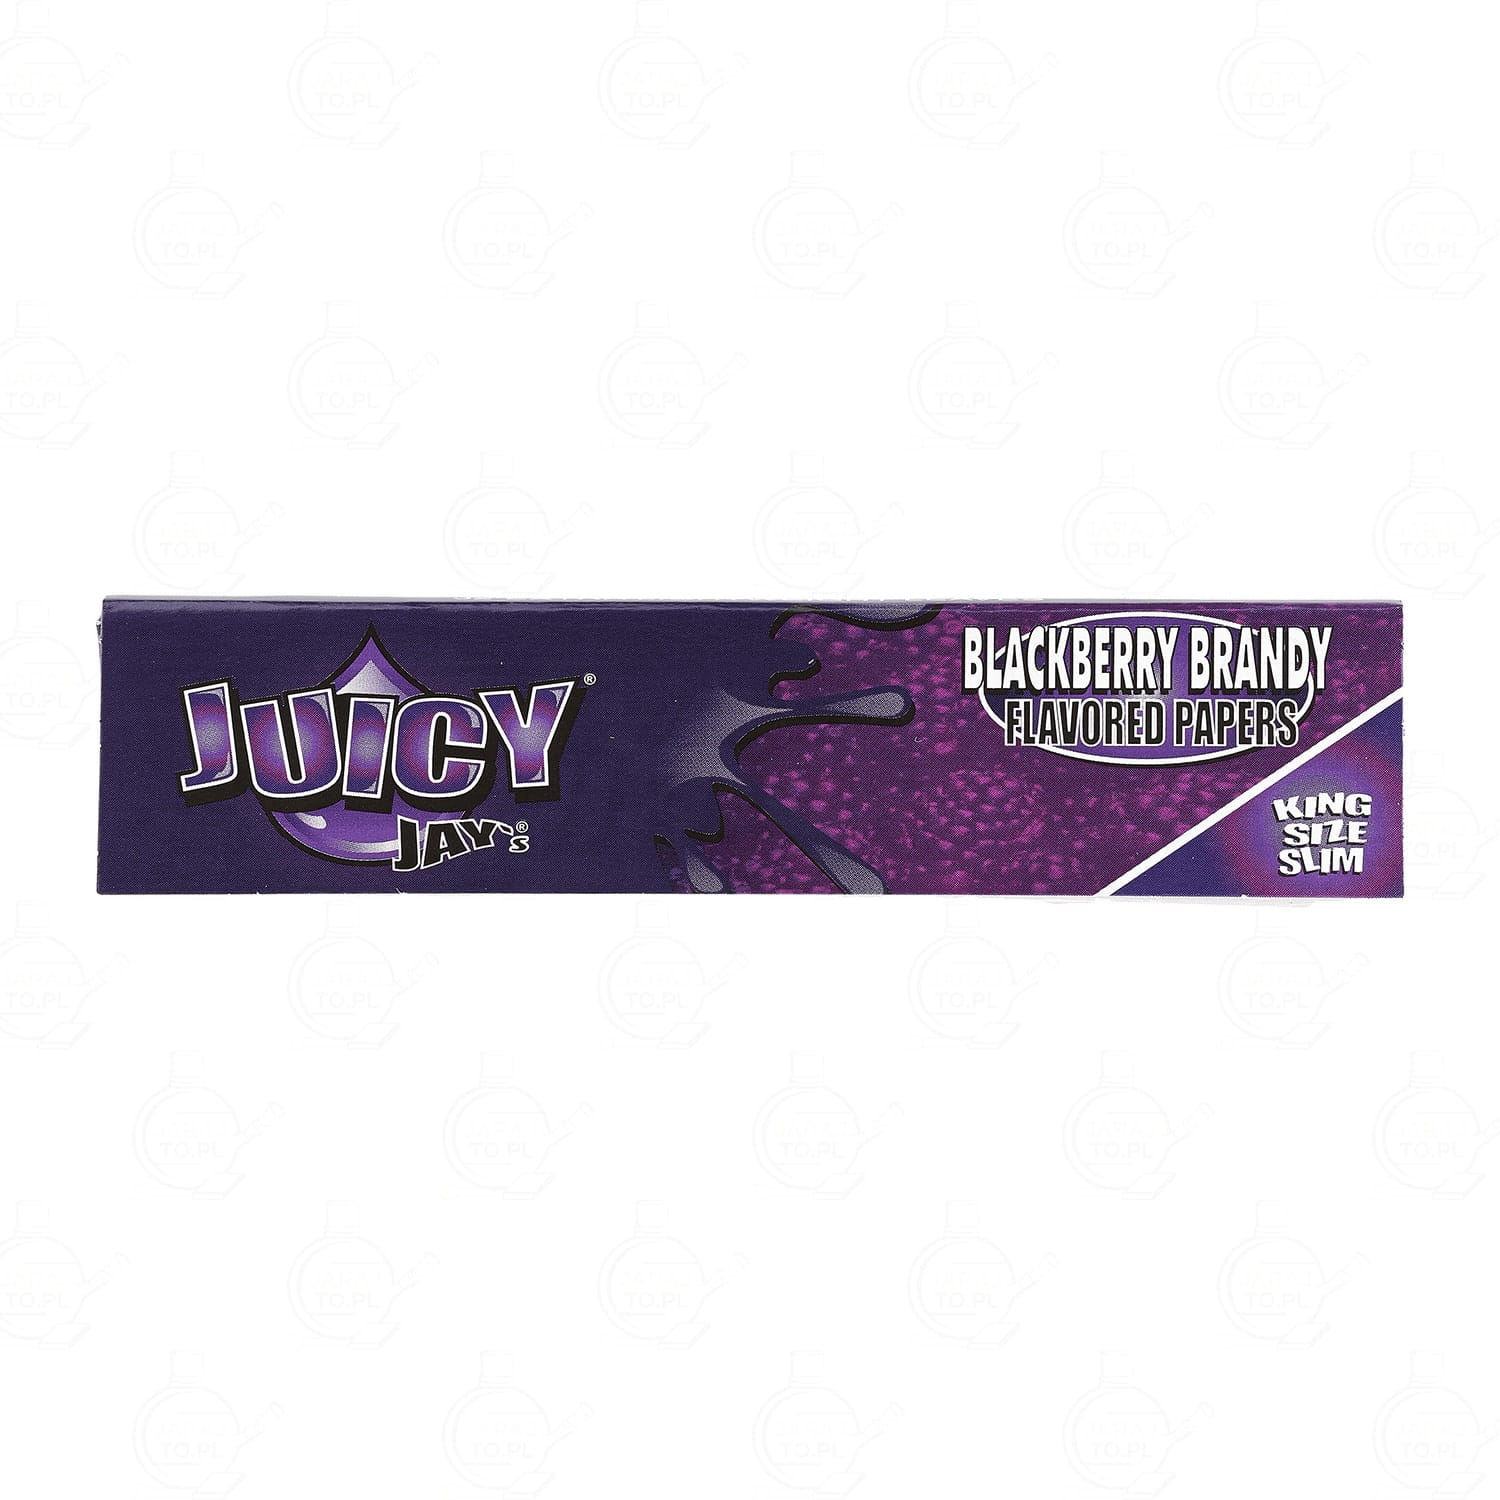 bibulki-juicy-jay-s-king-sizeblackberry-brandy-polandweed